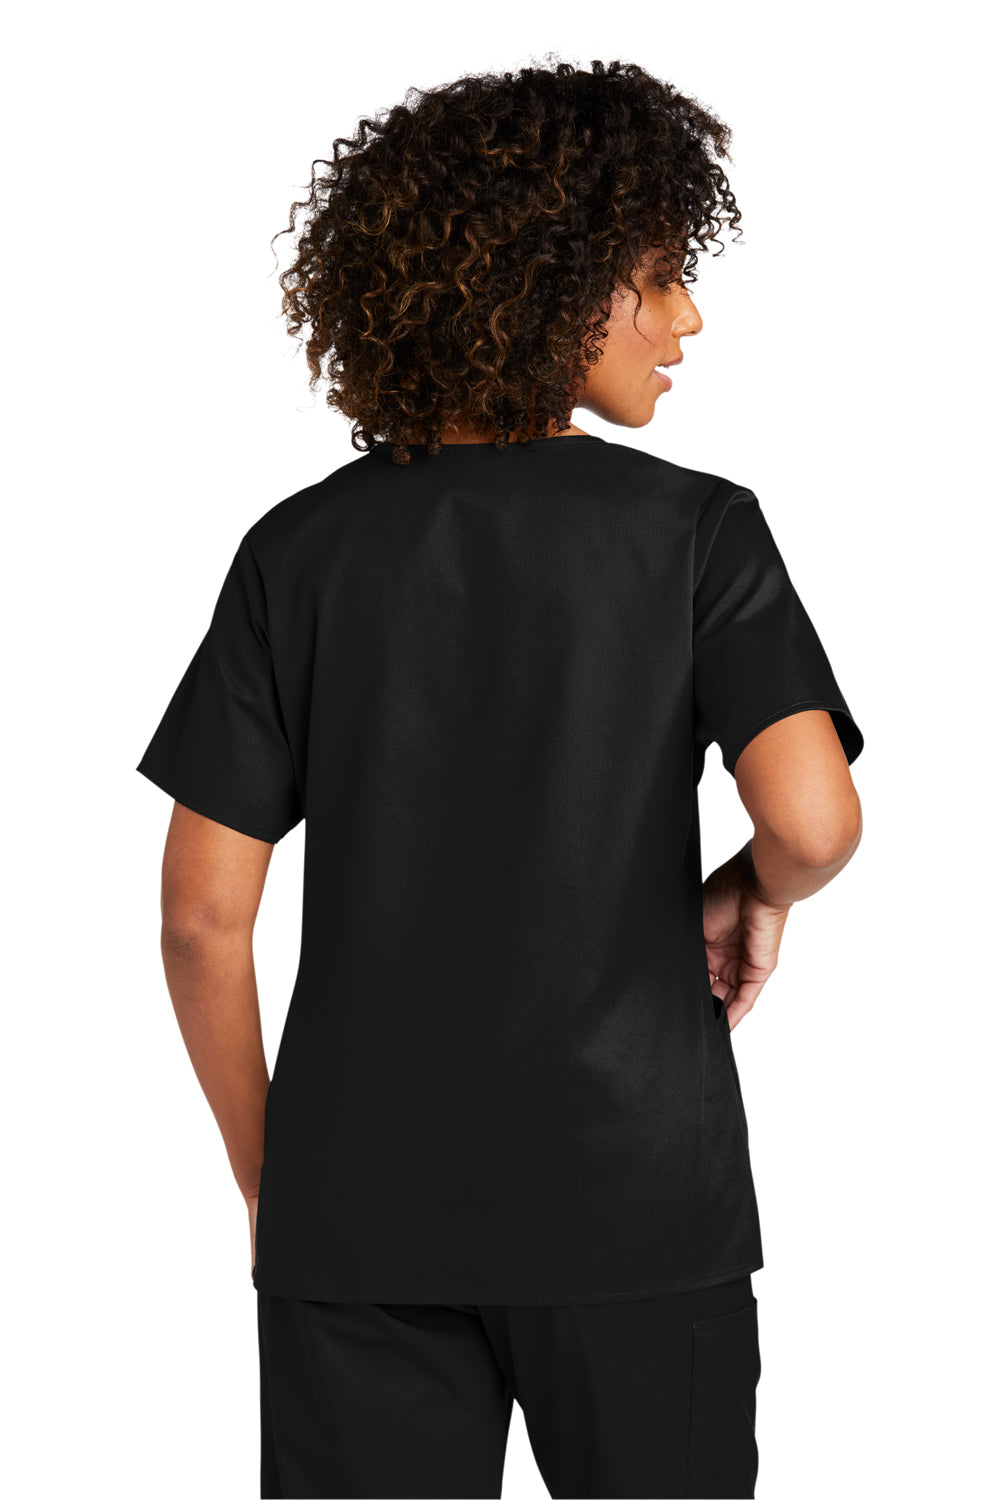 Wonderwink WW4760 WorkFlex Short Sleeve V-Neck Mock Wrap Shirt Black Back